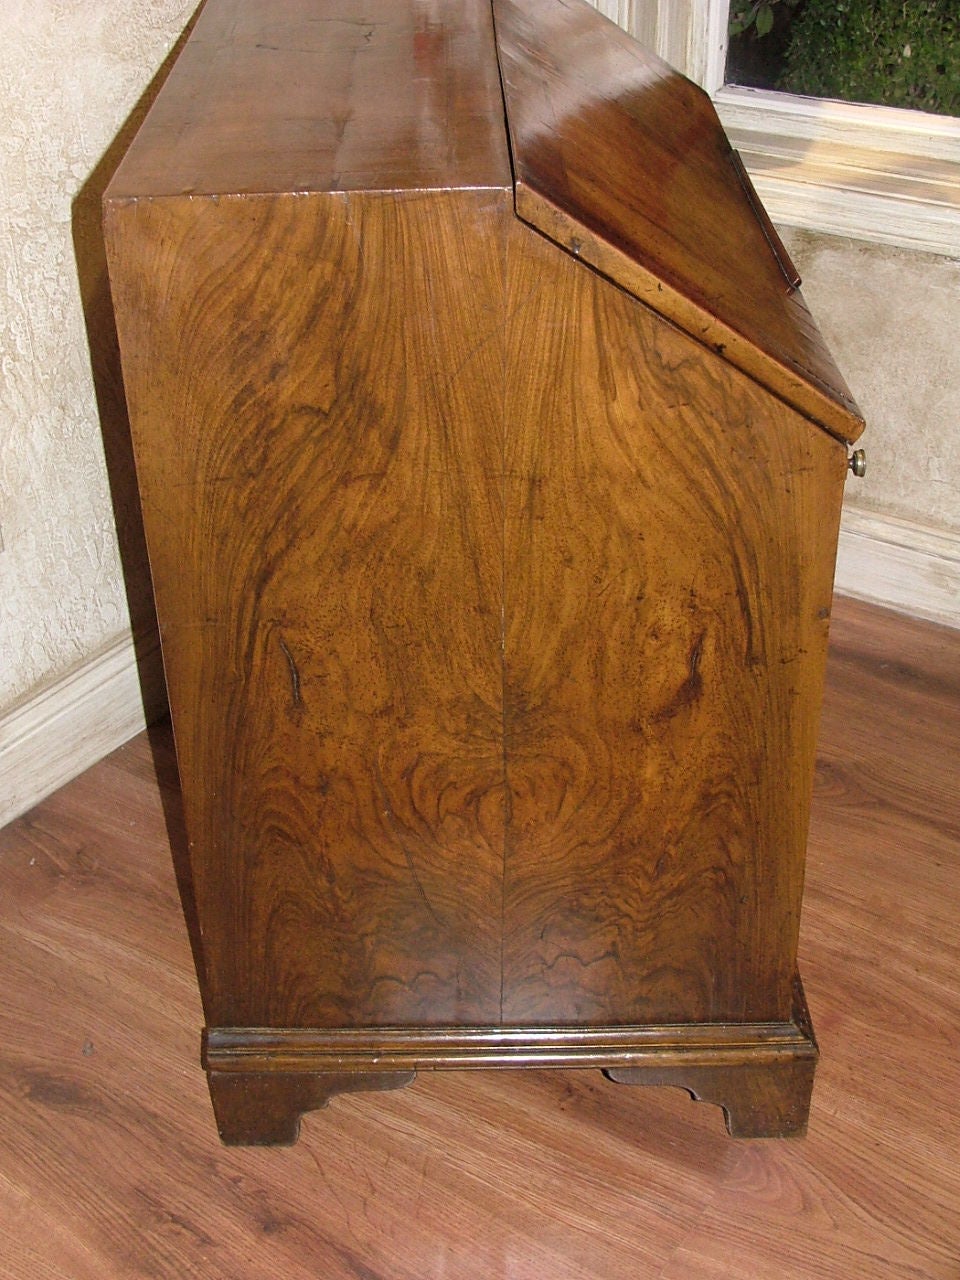 Circa 1710-1720 English slant front desk walnut Queen Anne style<br />
36